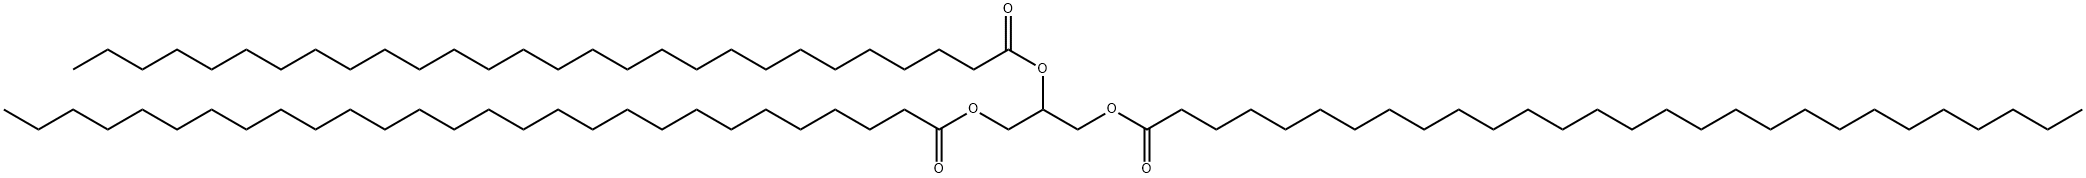 propane-1,2,3-triyl trioctacosanoate Structure